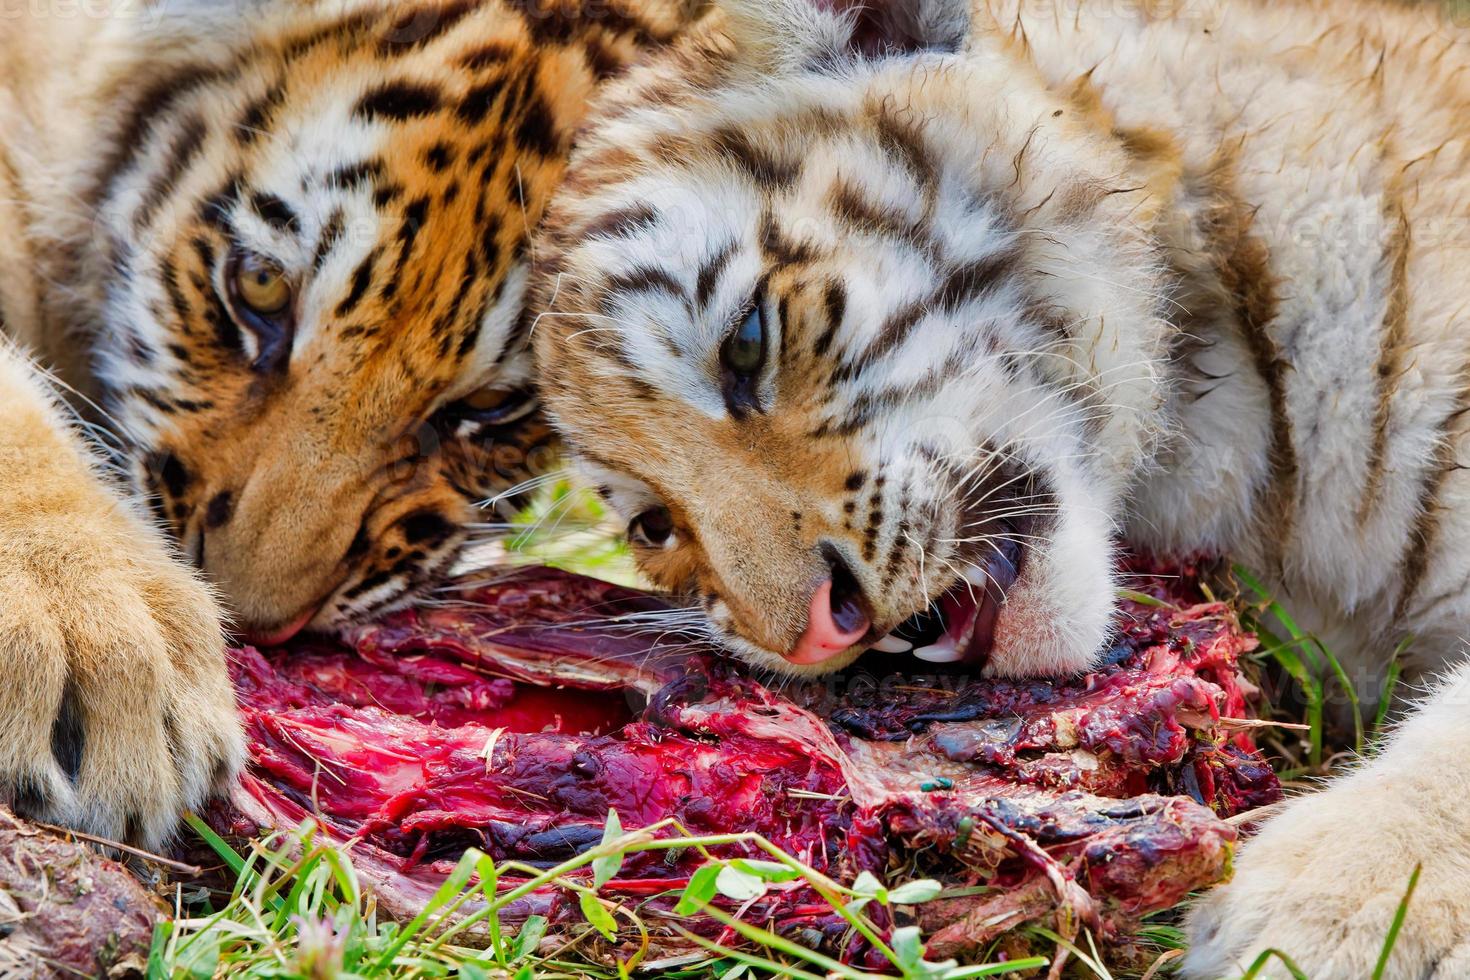 due giovani tigri siberiane panthera tigris altaica mangiano carne foto